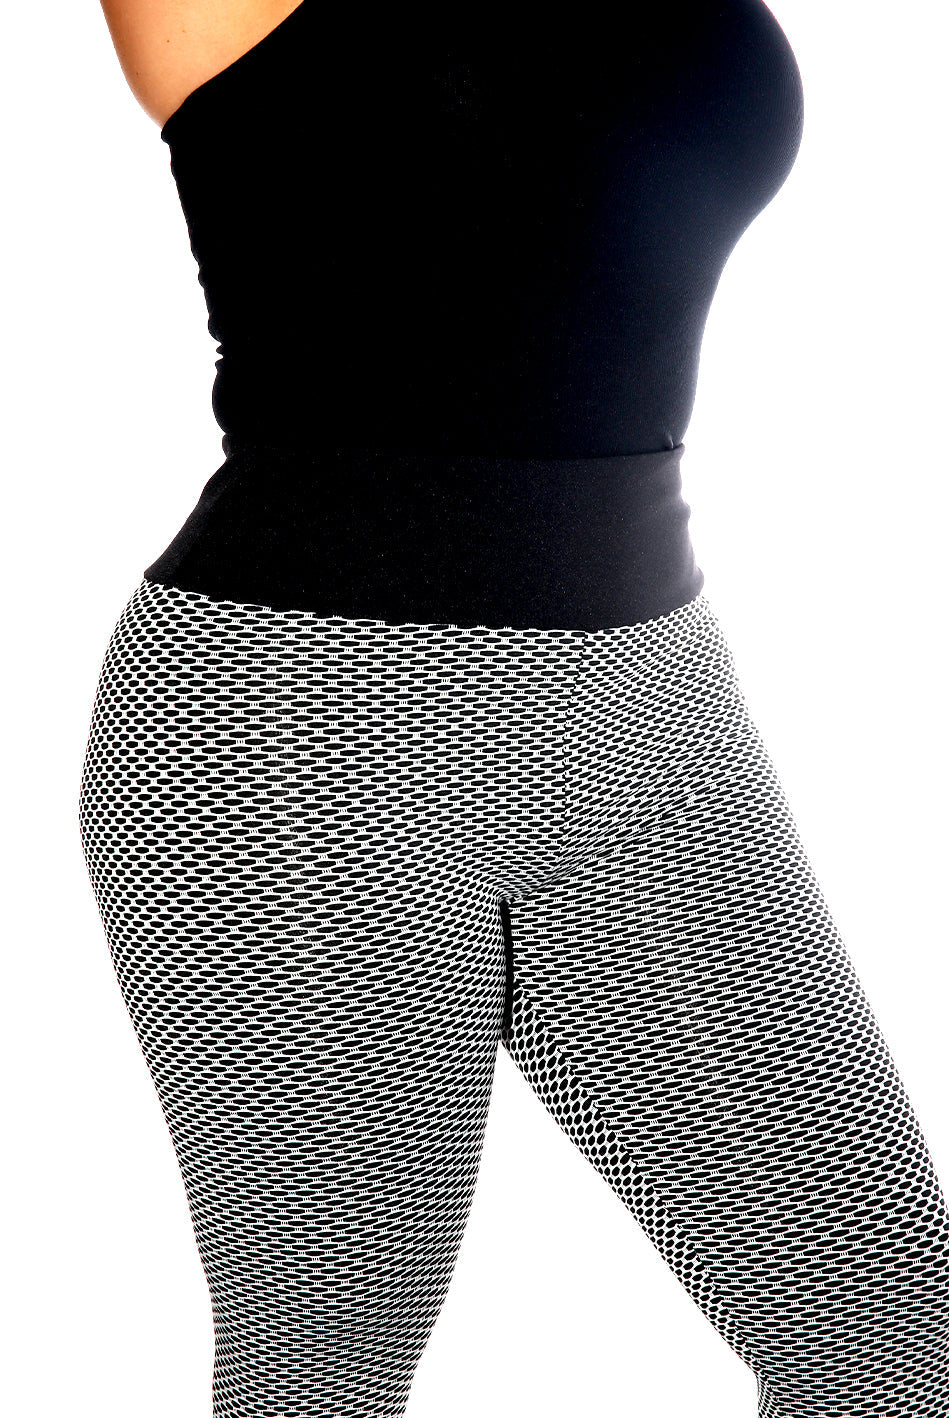 Wholesale Womens High Waist Two Tone Textured Honeycomb Butt Scrunch Yoga Leggings - Black, White - S&G Apparel